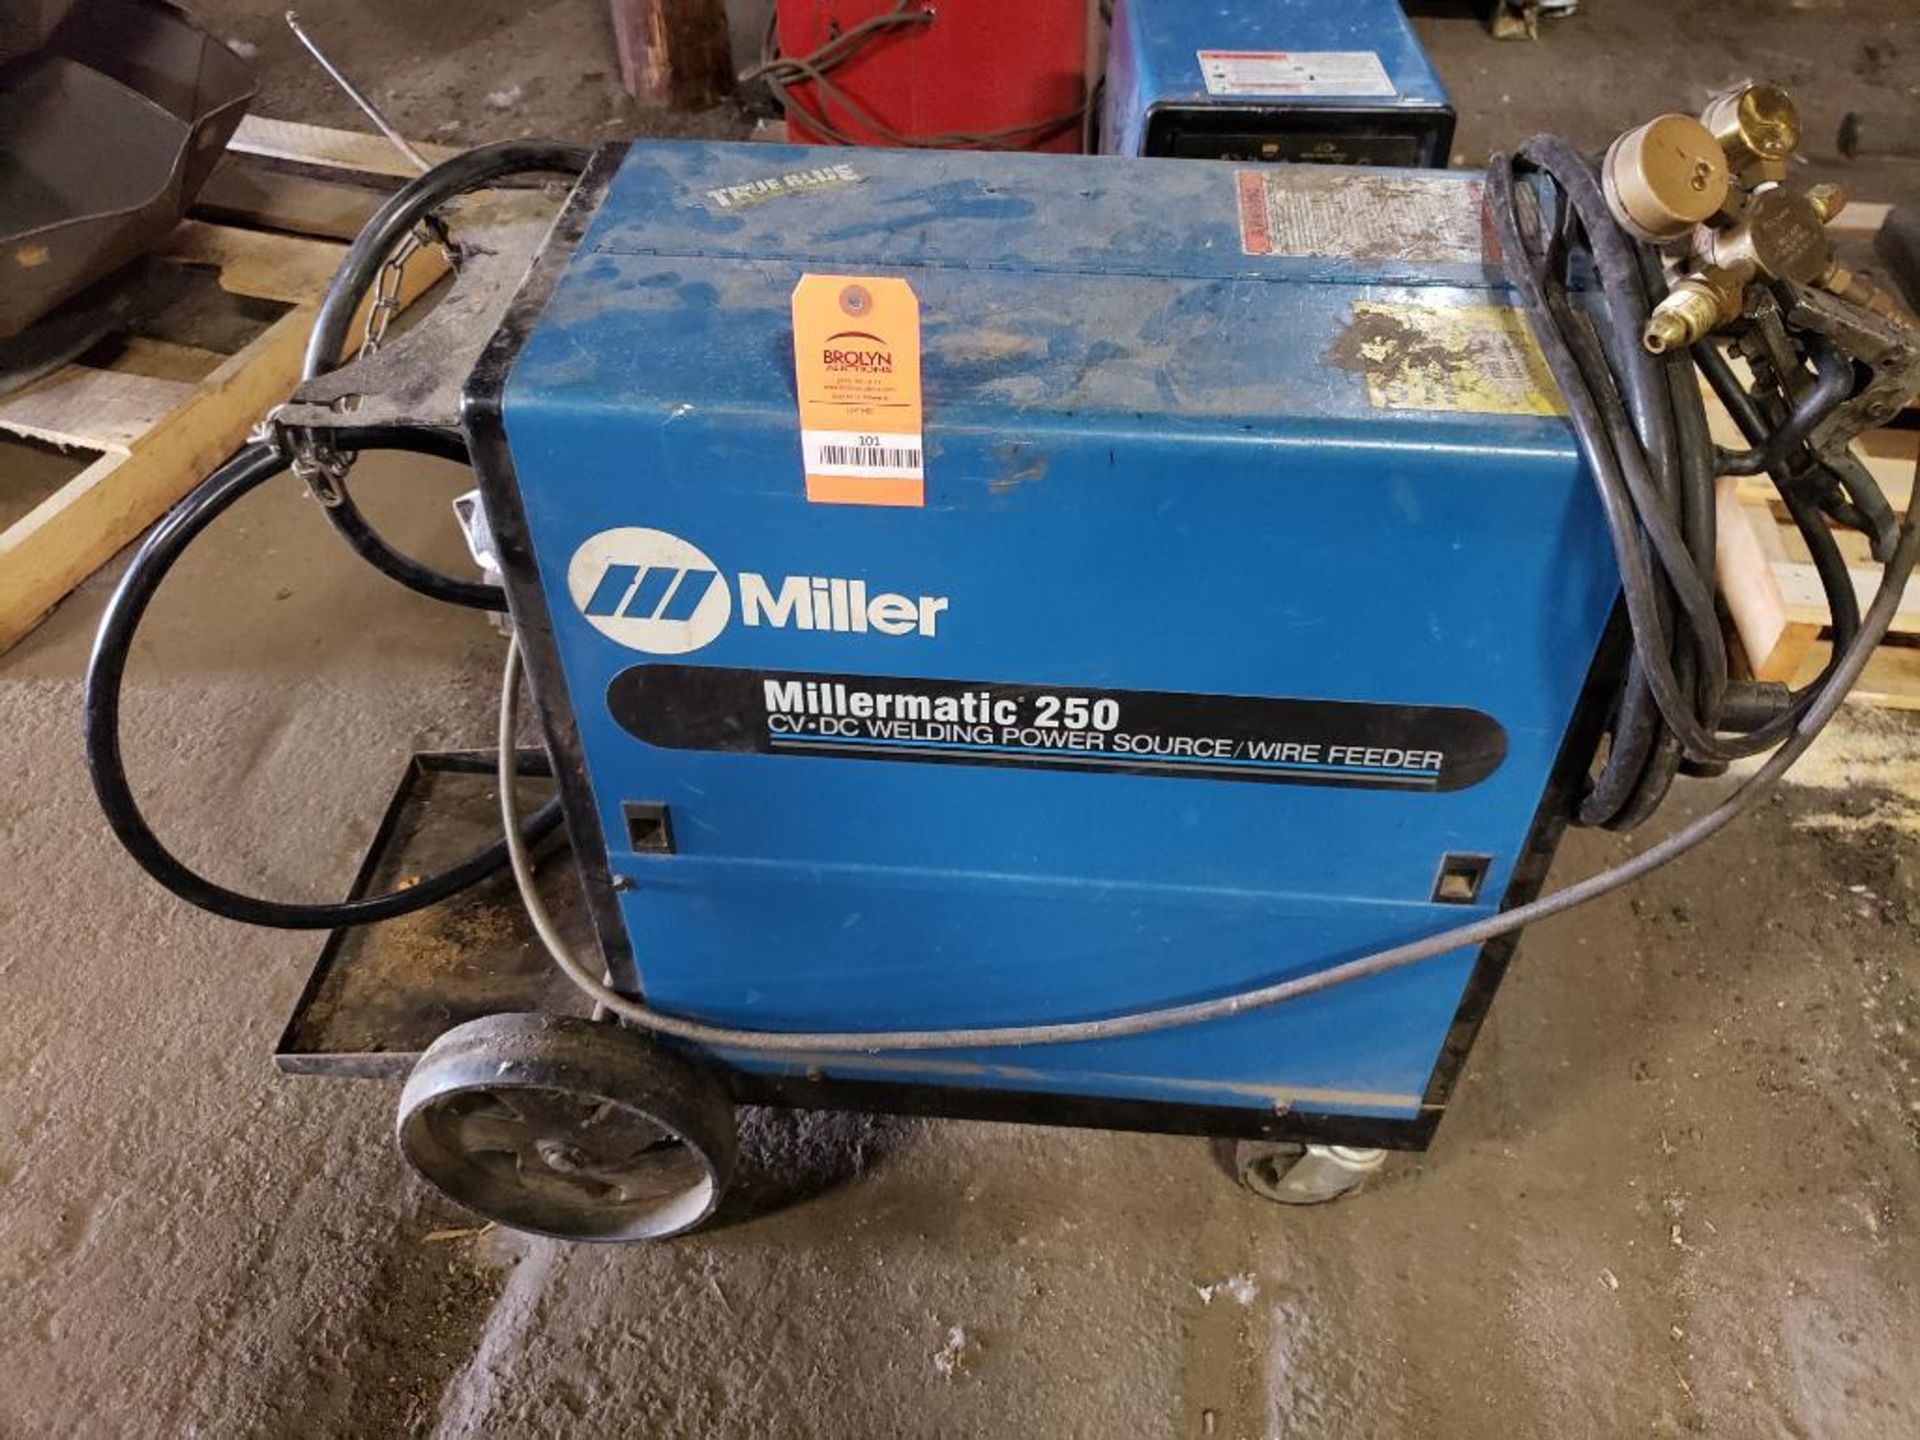 Miller Millermatic 250 CV - DC welding power source / wire feeder. 903291.